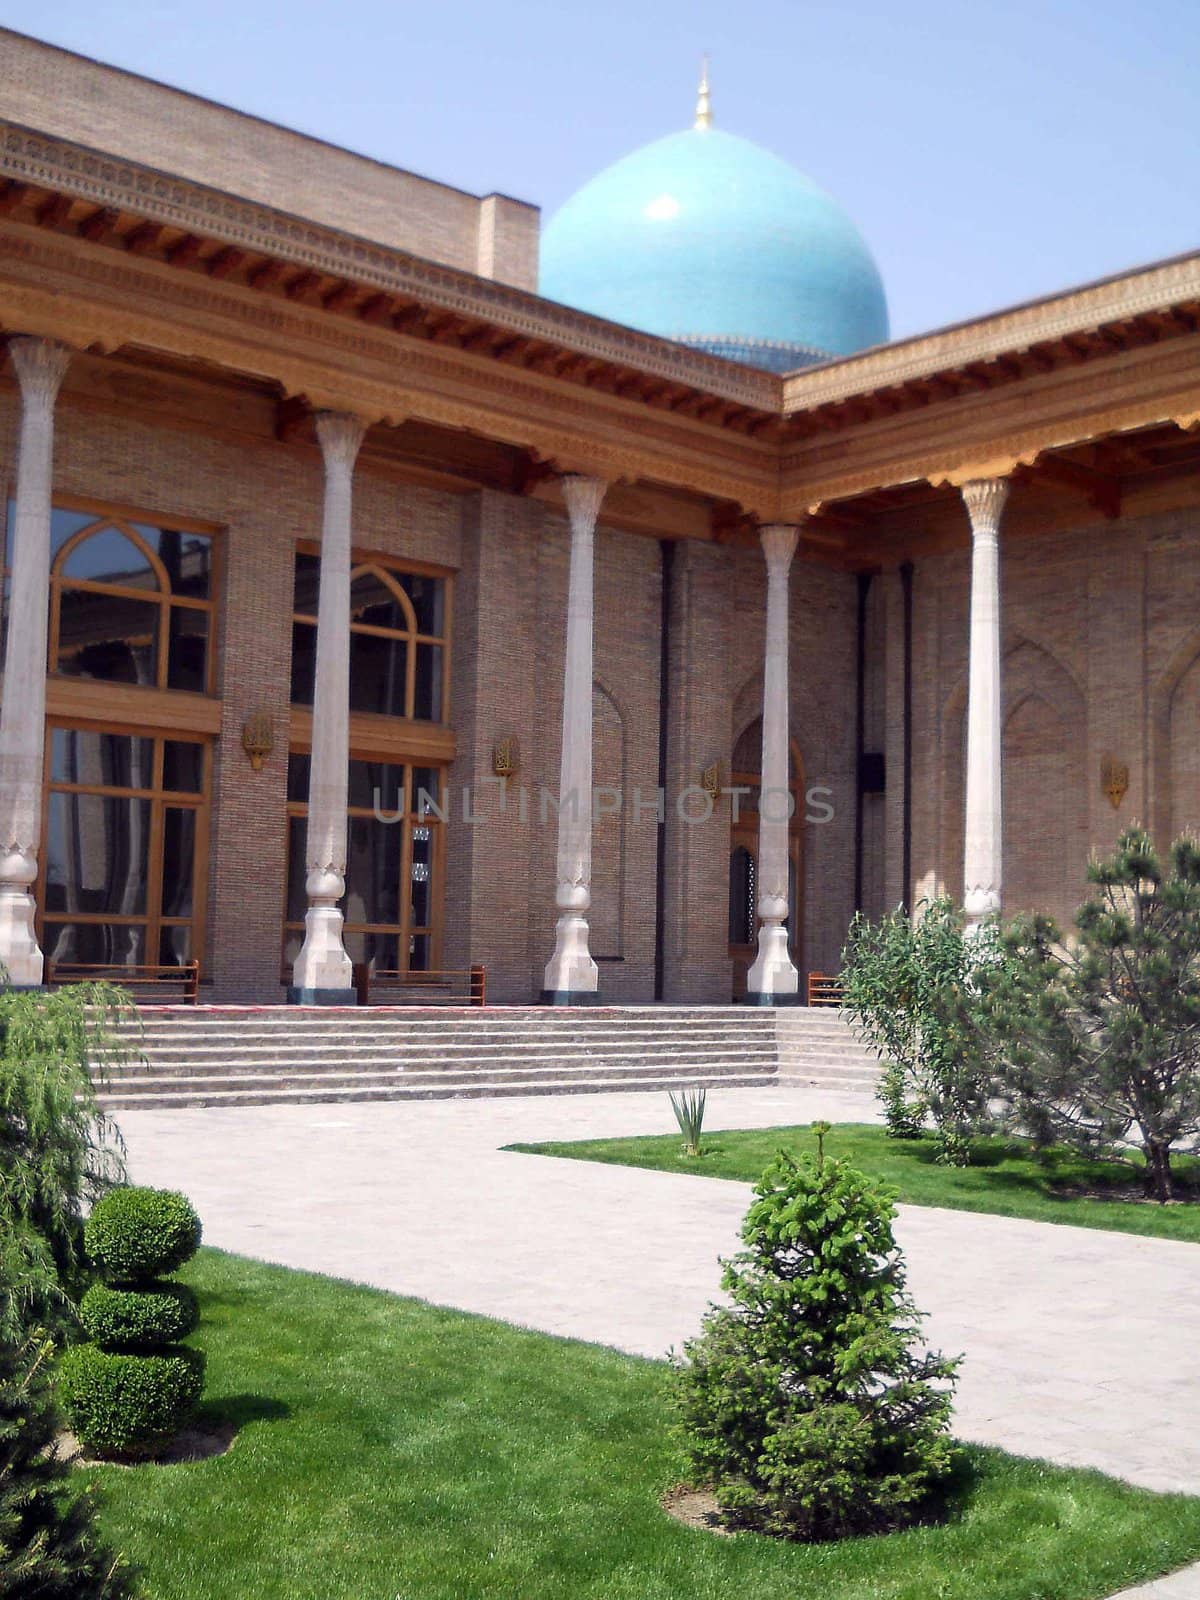 Mosque interior, city landscape of the Tashkent, Uzbekistan